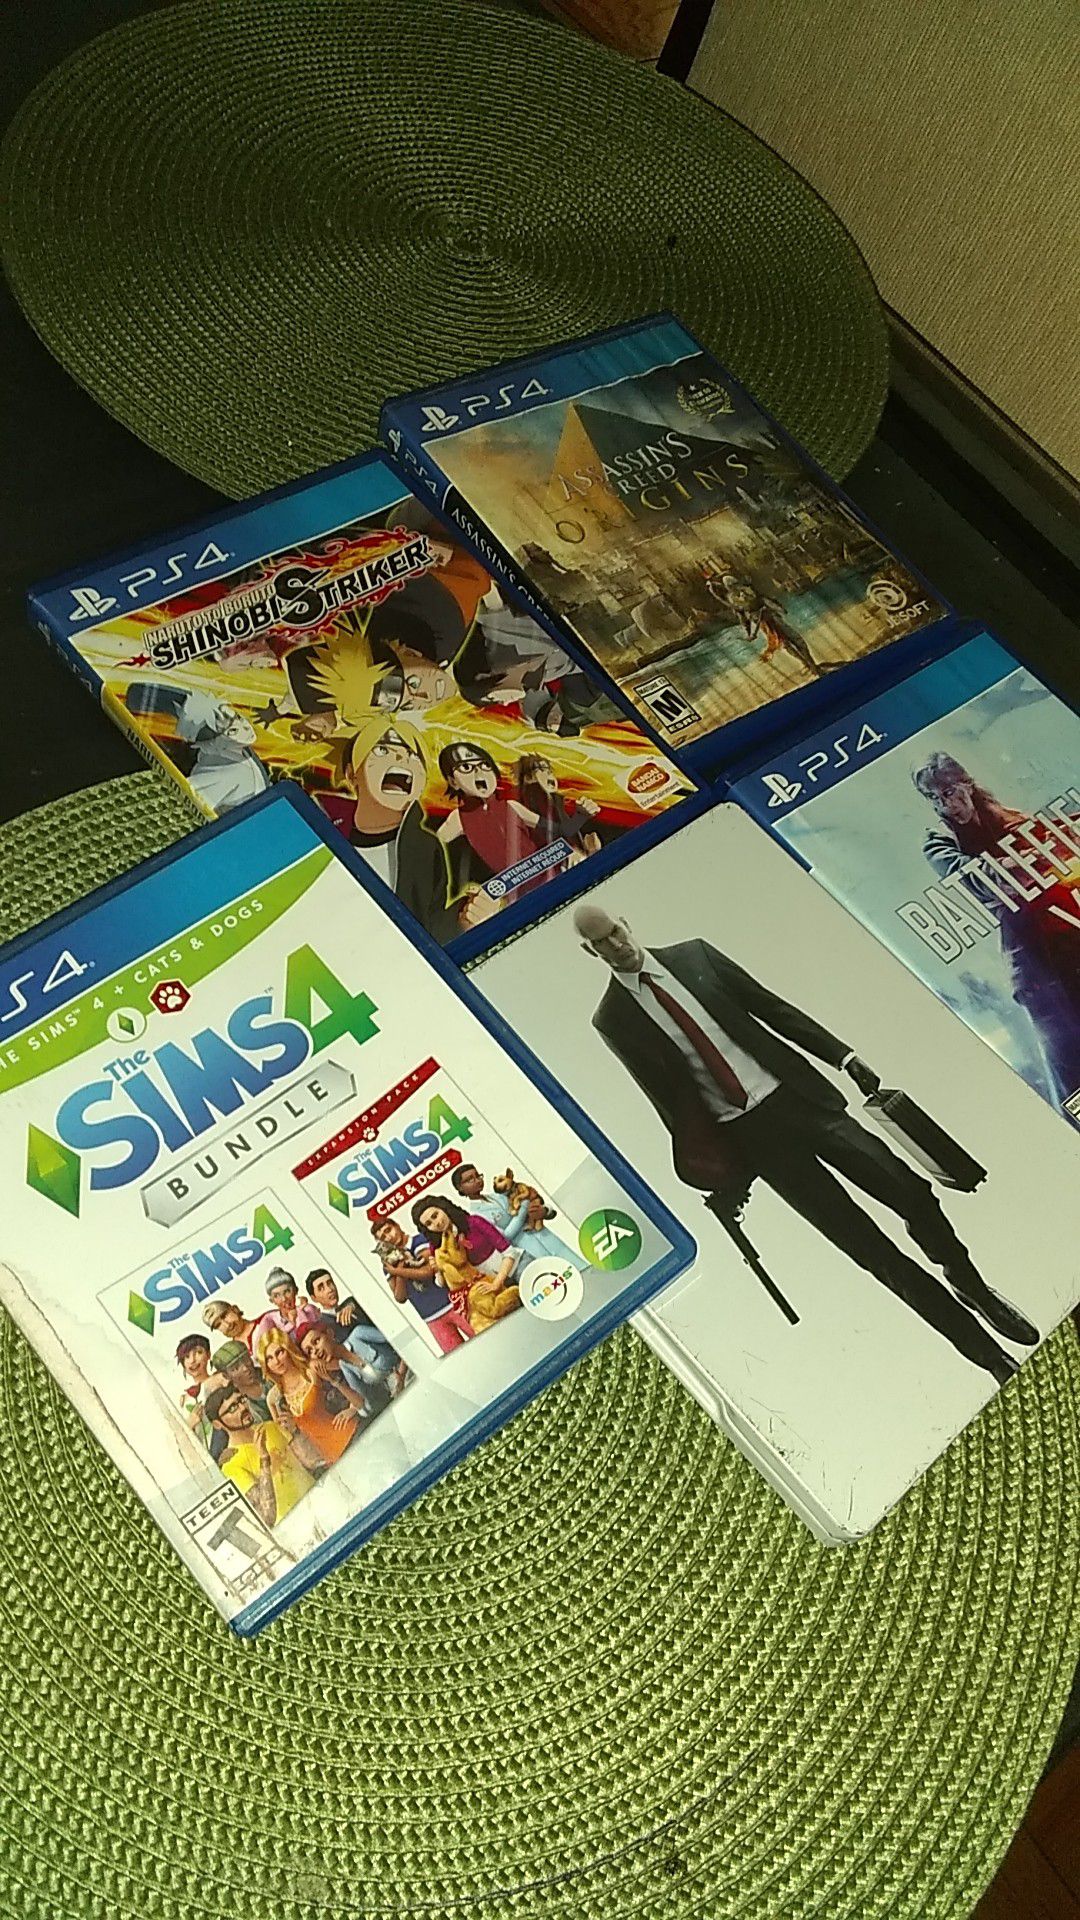 5 PS4 games